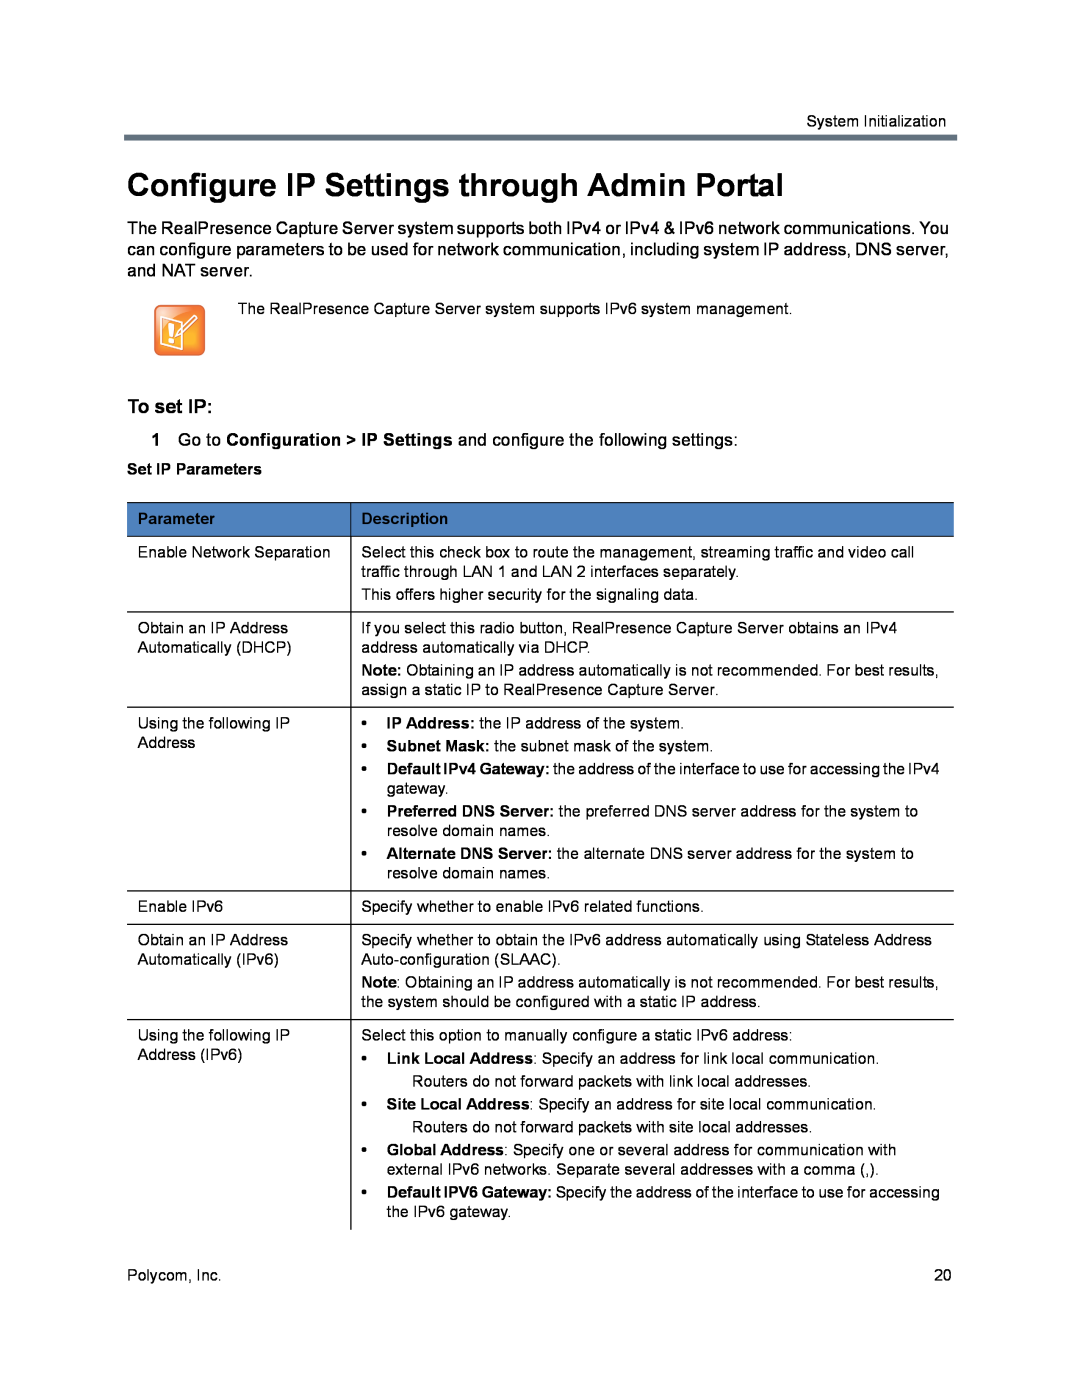 Polycom 40/0 manual Configure IP Settings through Admin Portal, To set IP 